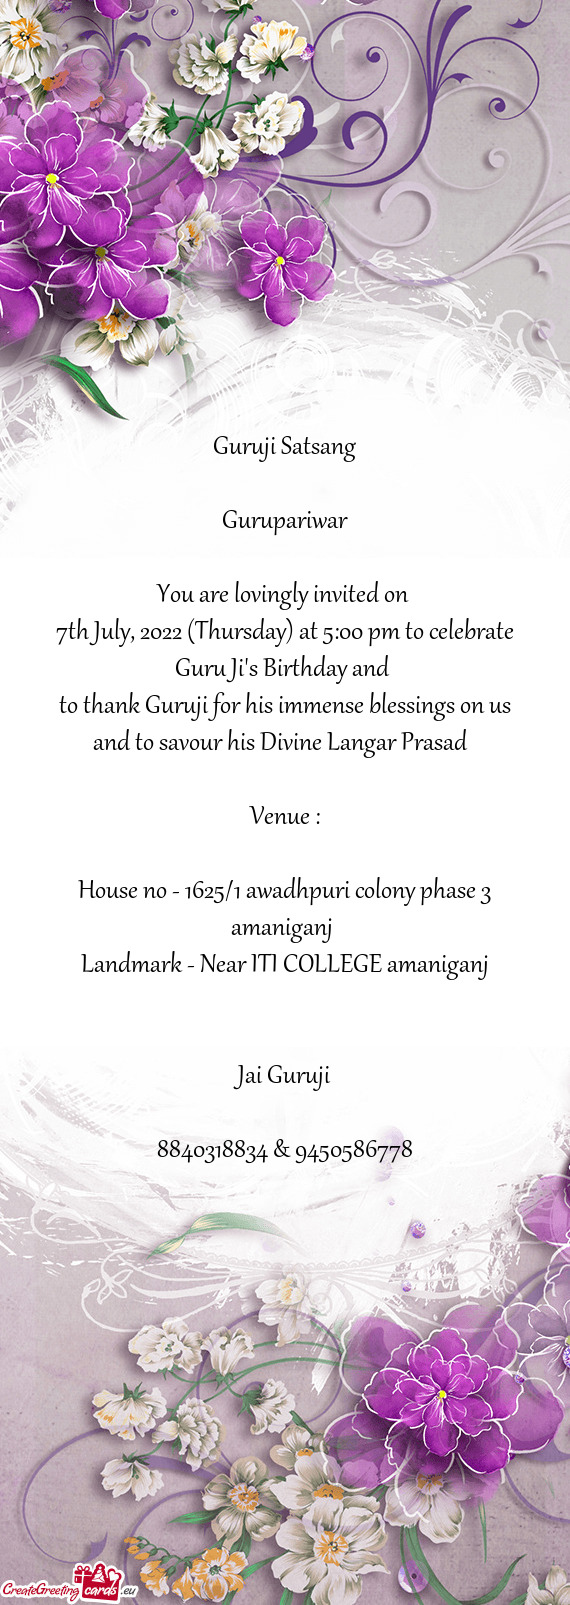 7th July, 2022 (Thursday) at 5:00 pm to celebrate Guru Ji